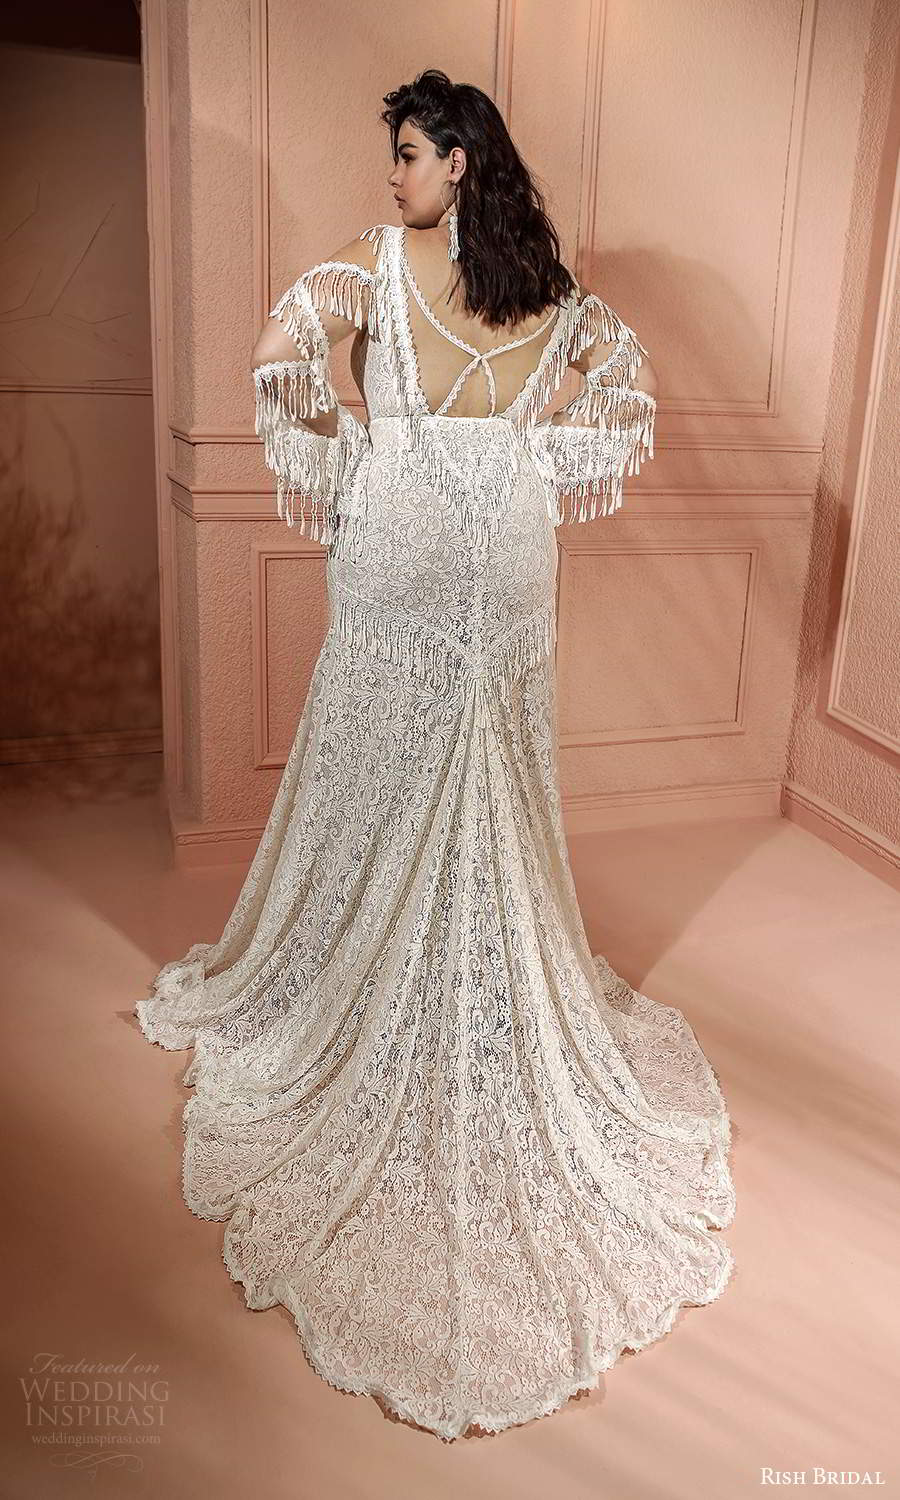 rish bridal 2021 bridal flare long sleeves plunging v neckline fully embellished lace fit flare a line plus wedding dress chapel train slit skirt (1) bv